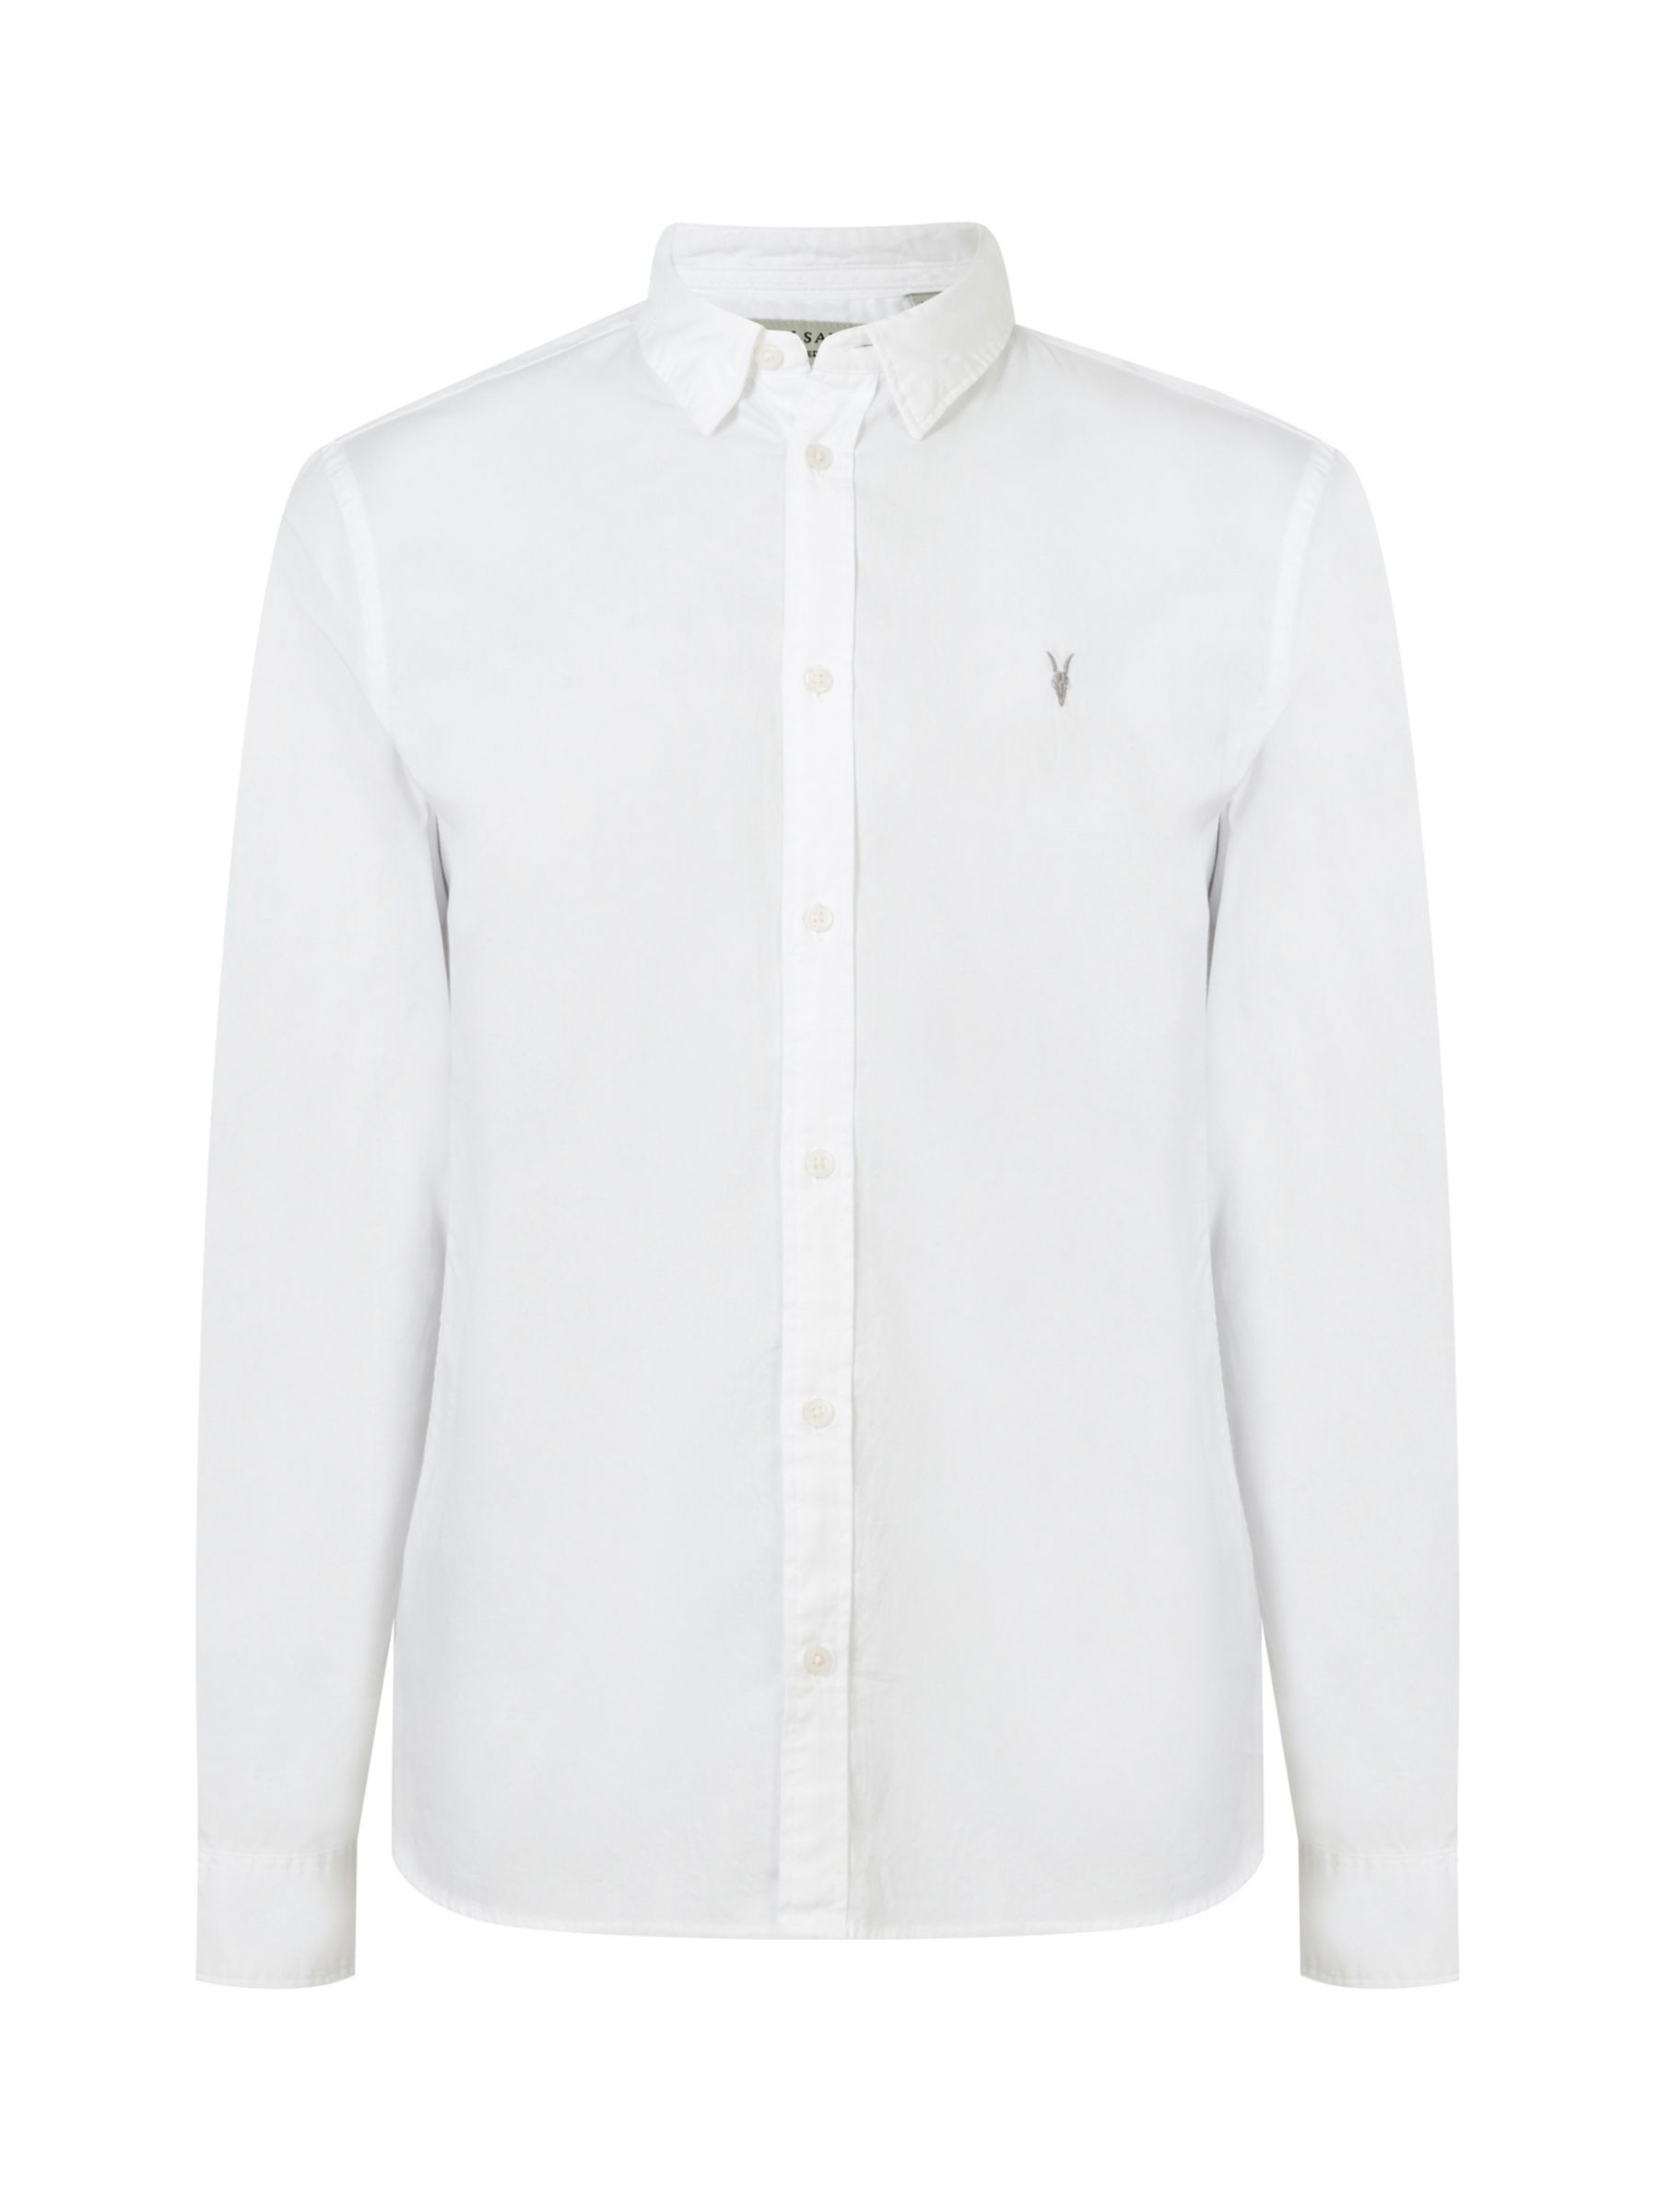 AllSaints Hawthorne Shirt, White at John Lewis & Partners